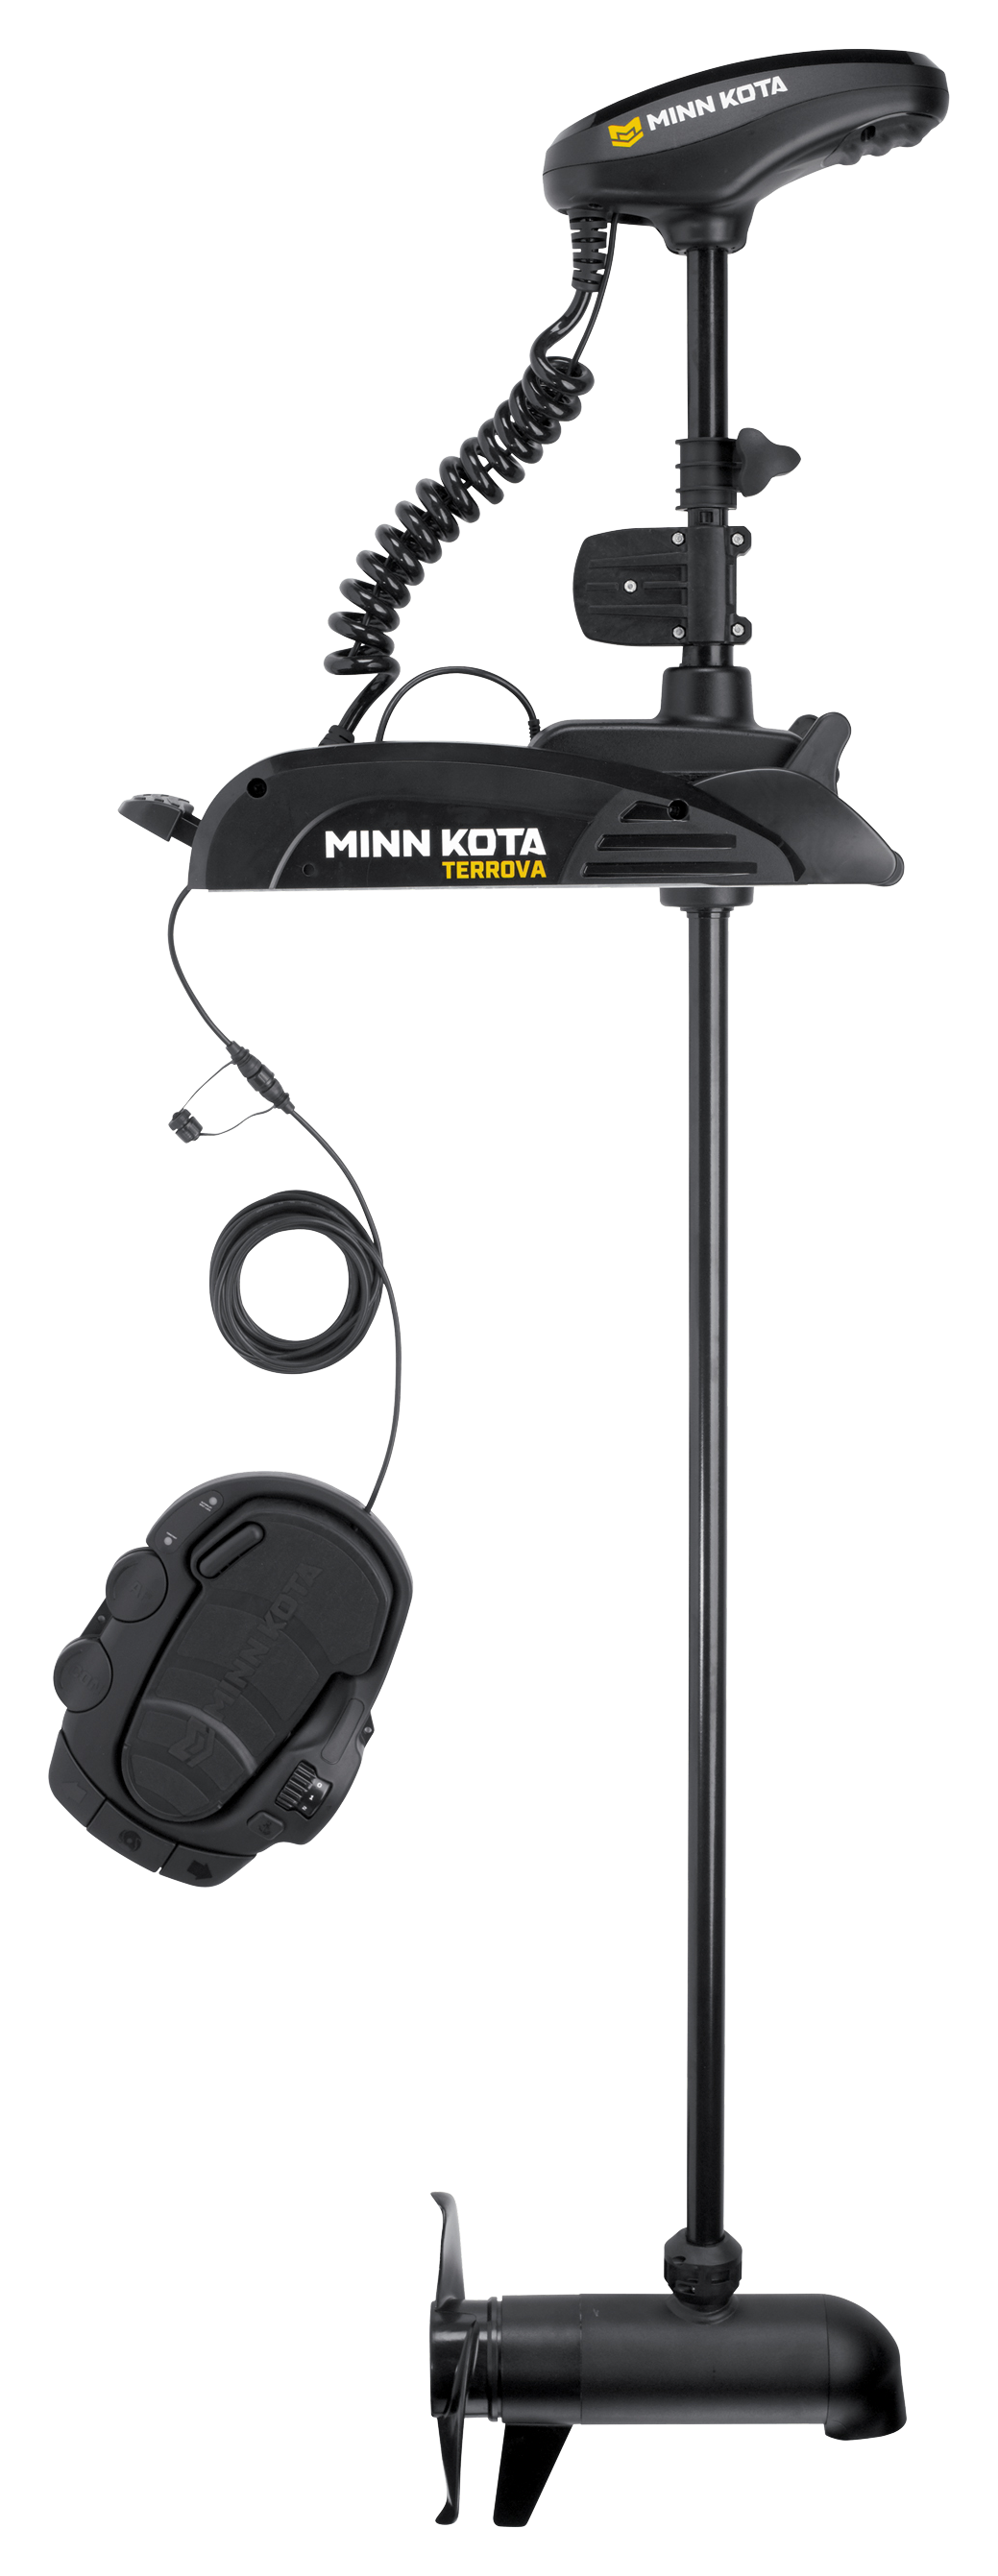 Minn Kota Terrova Bow Mount Bluetooth Trolling Motor with i-Pilot US2 and Foot Pedal